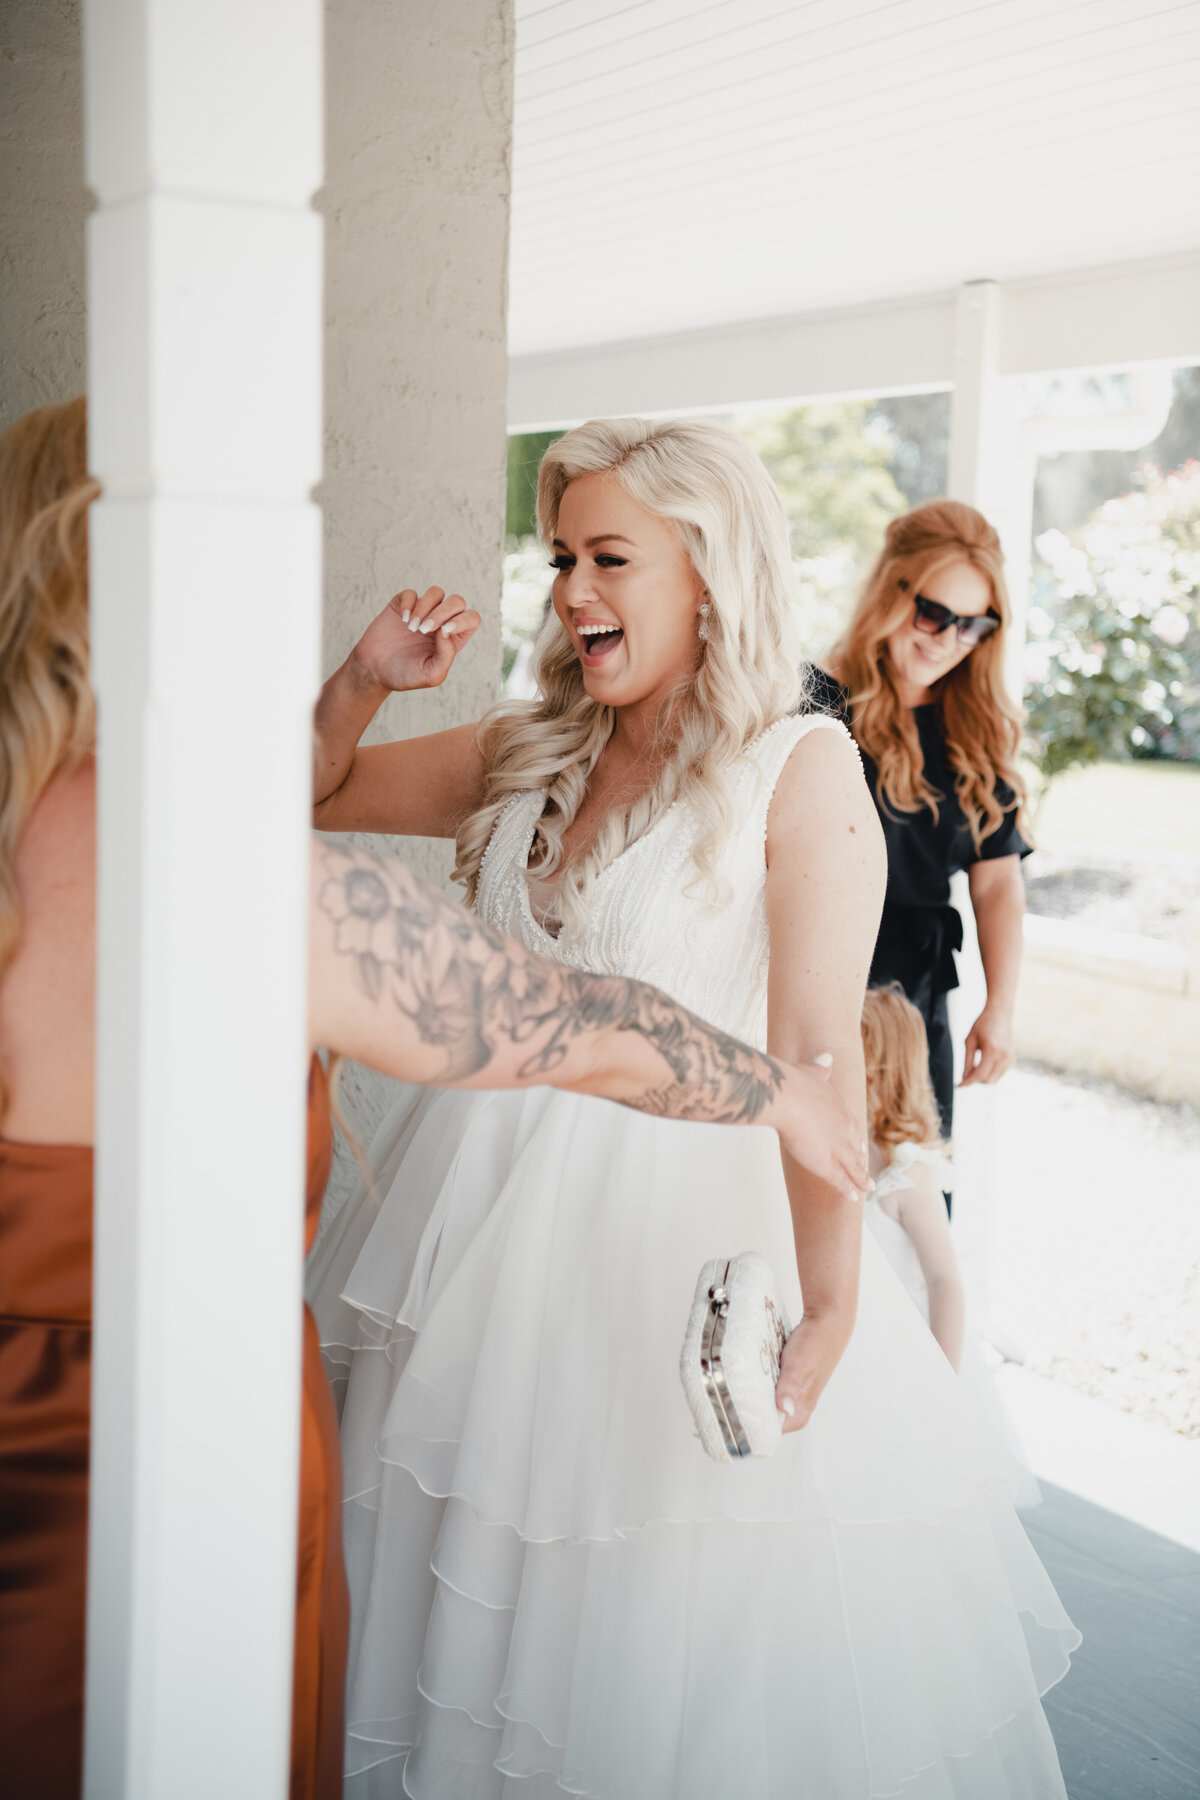 Abigail_Steven_Wedding_Images_Roam Ahead Weddings - 180